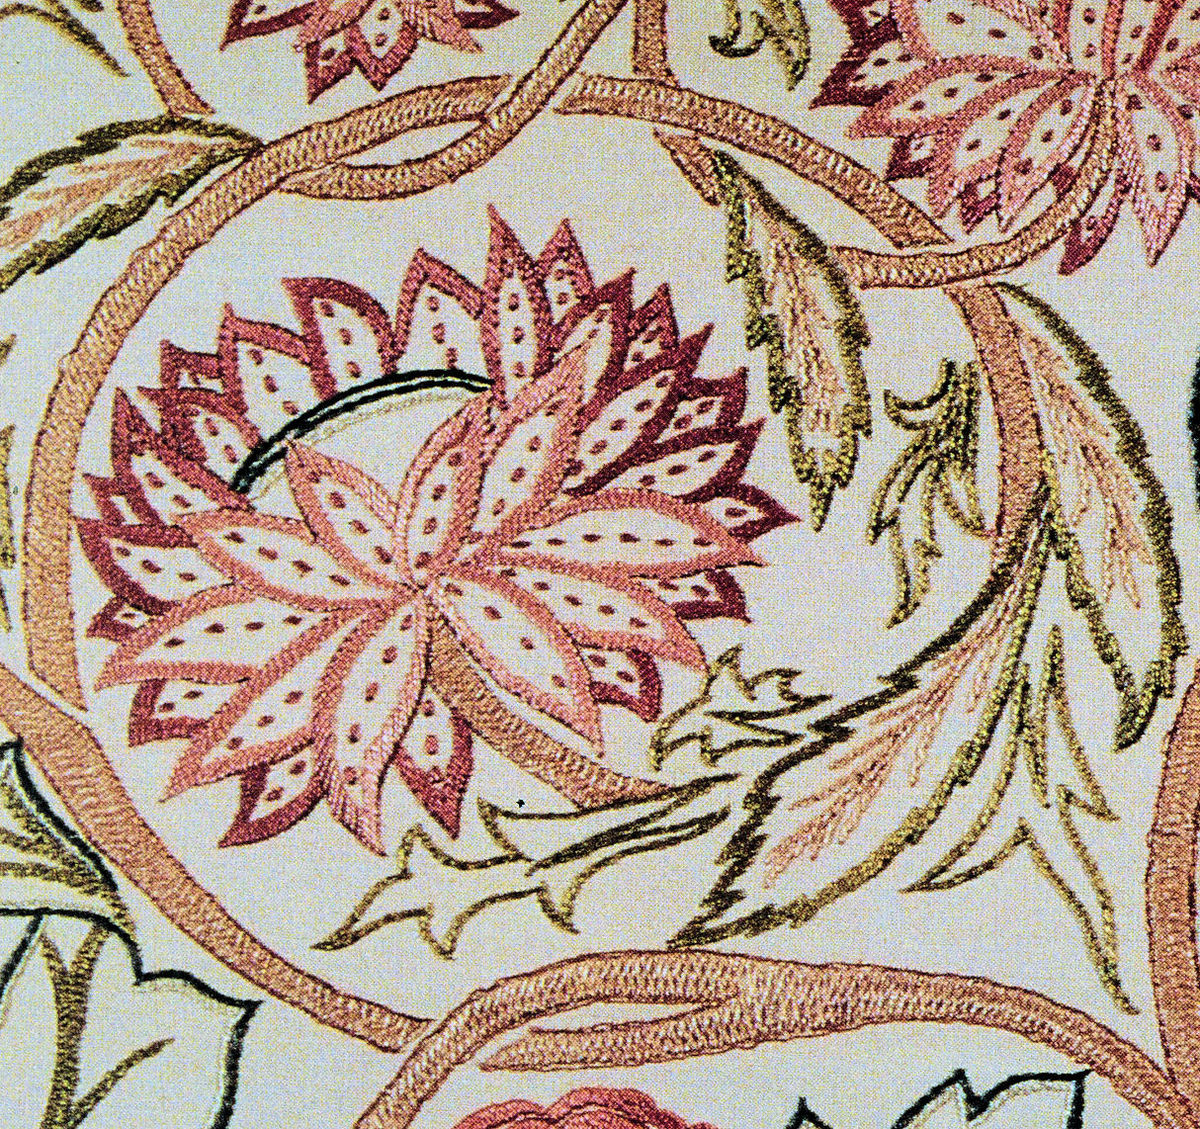 Korean Embroidery Patterns Straight Stitch Wikipedia